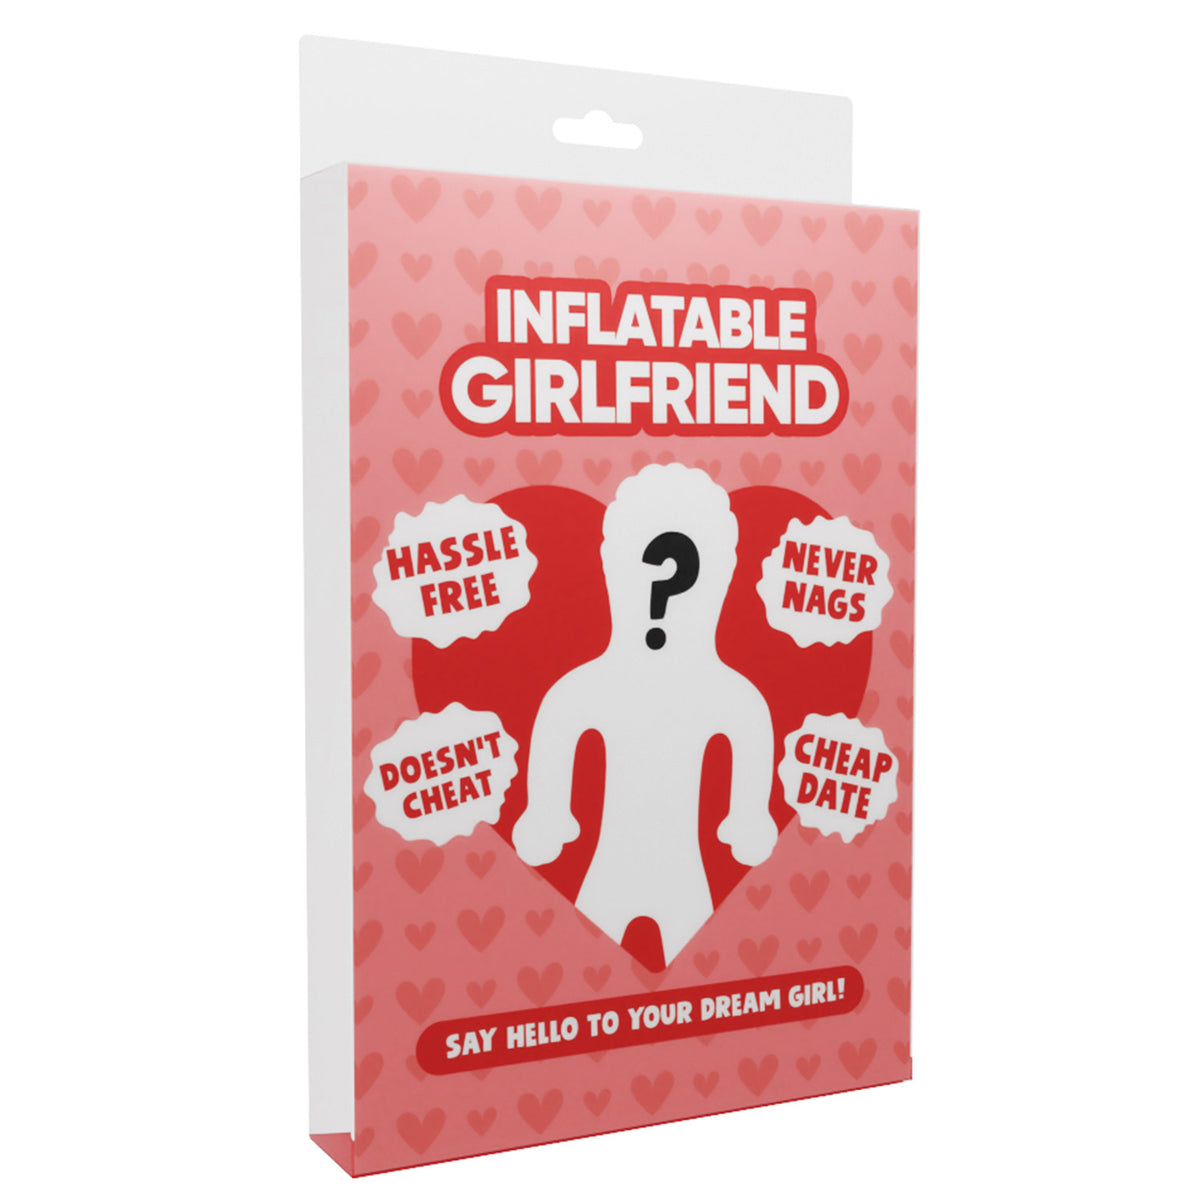 Inflatable Girlfriend Box